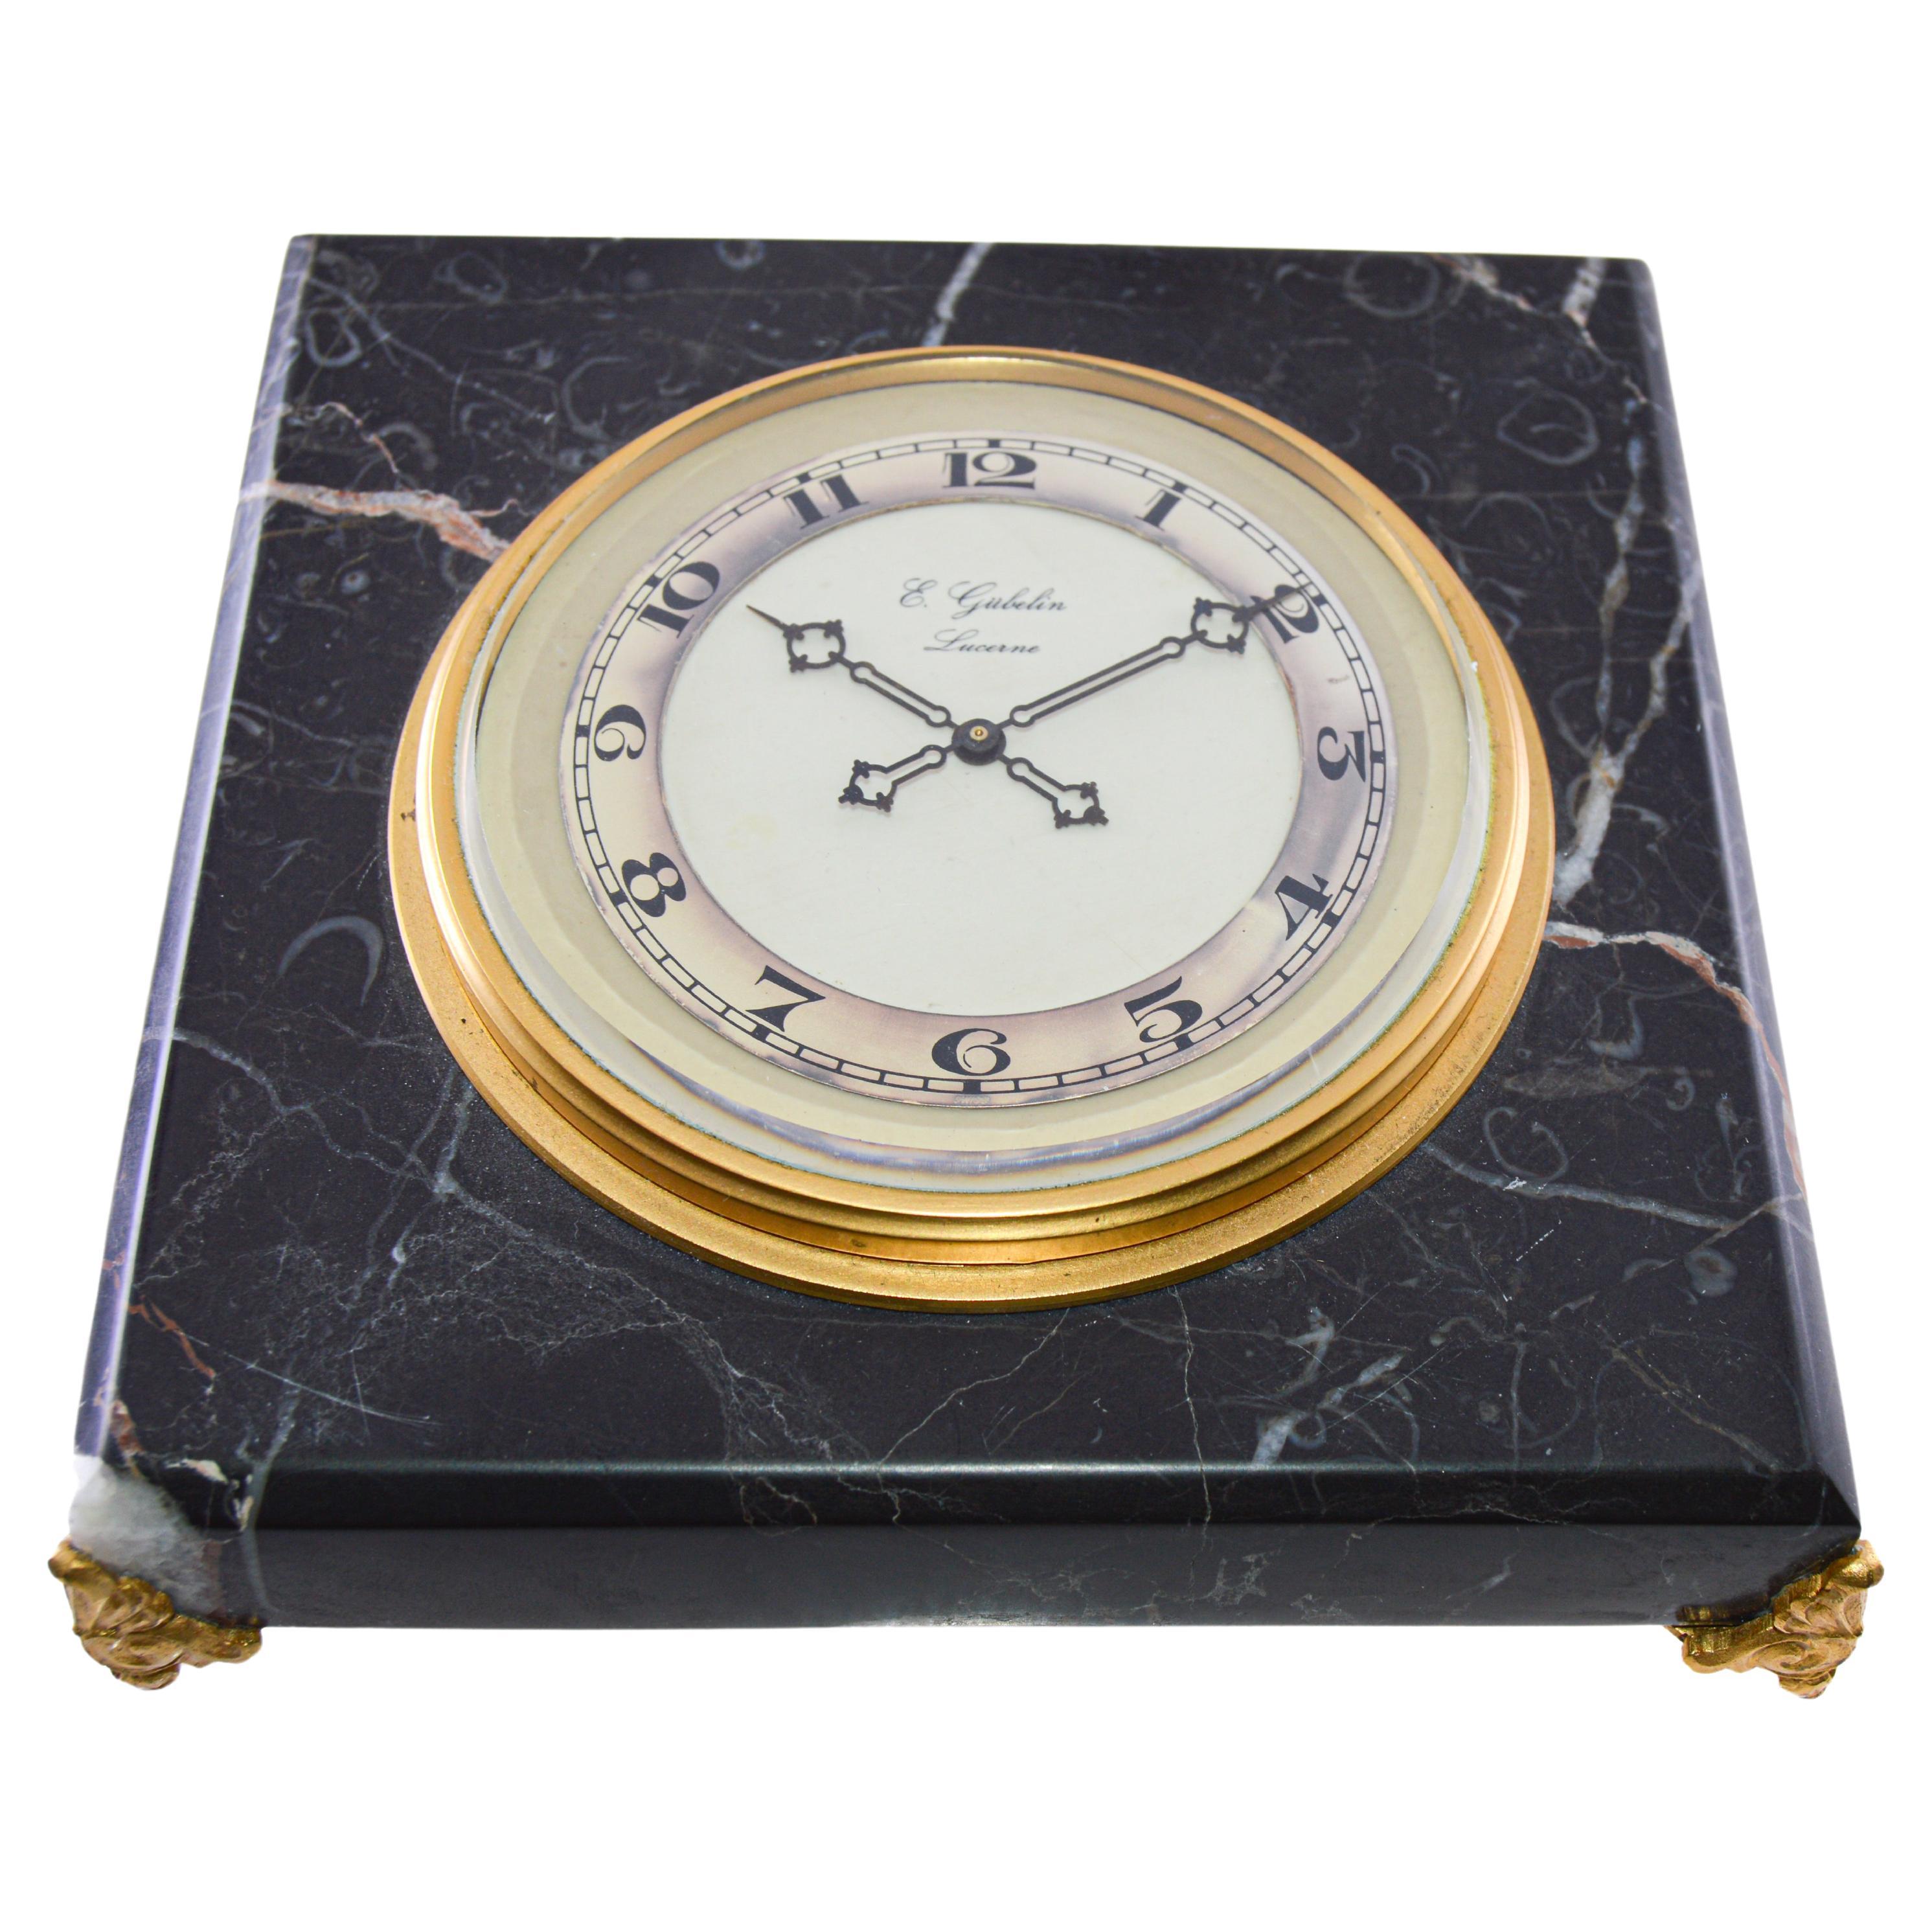 1930s E. Gubelin Watch Company Art Deco Stone Manually Wound Table Clock